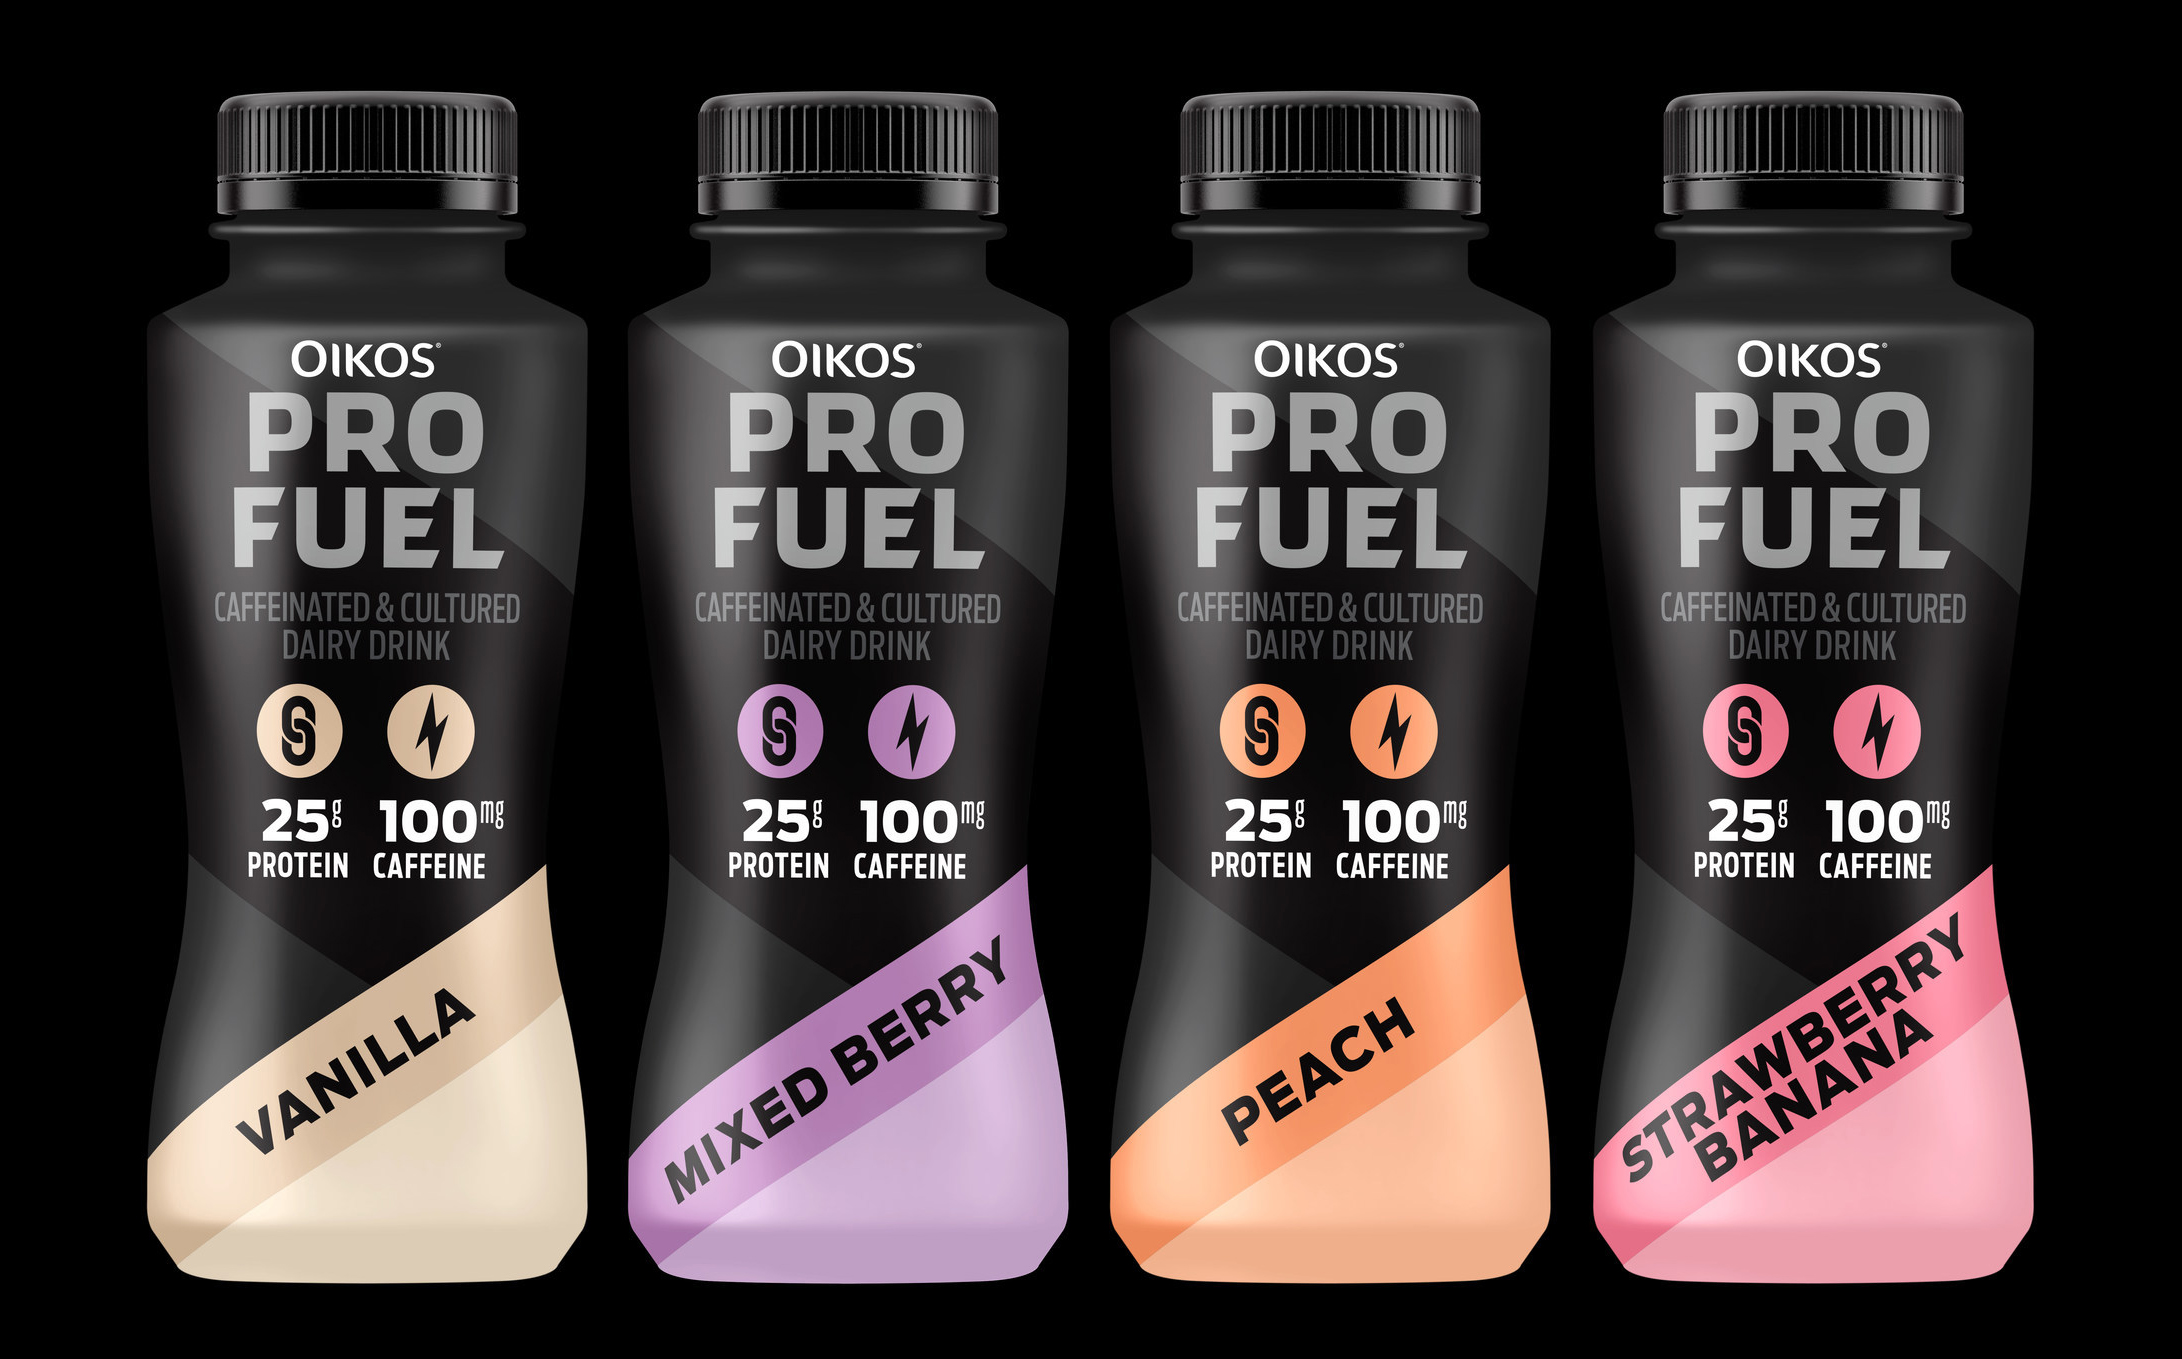 Danone releases Oikos Pro Fuel protein caffeinated beverage